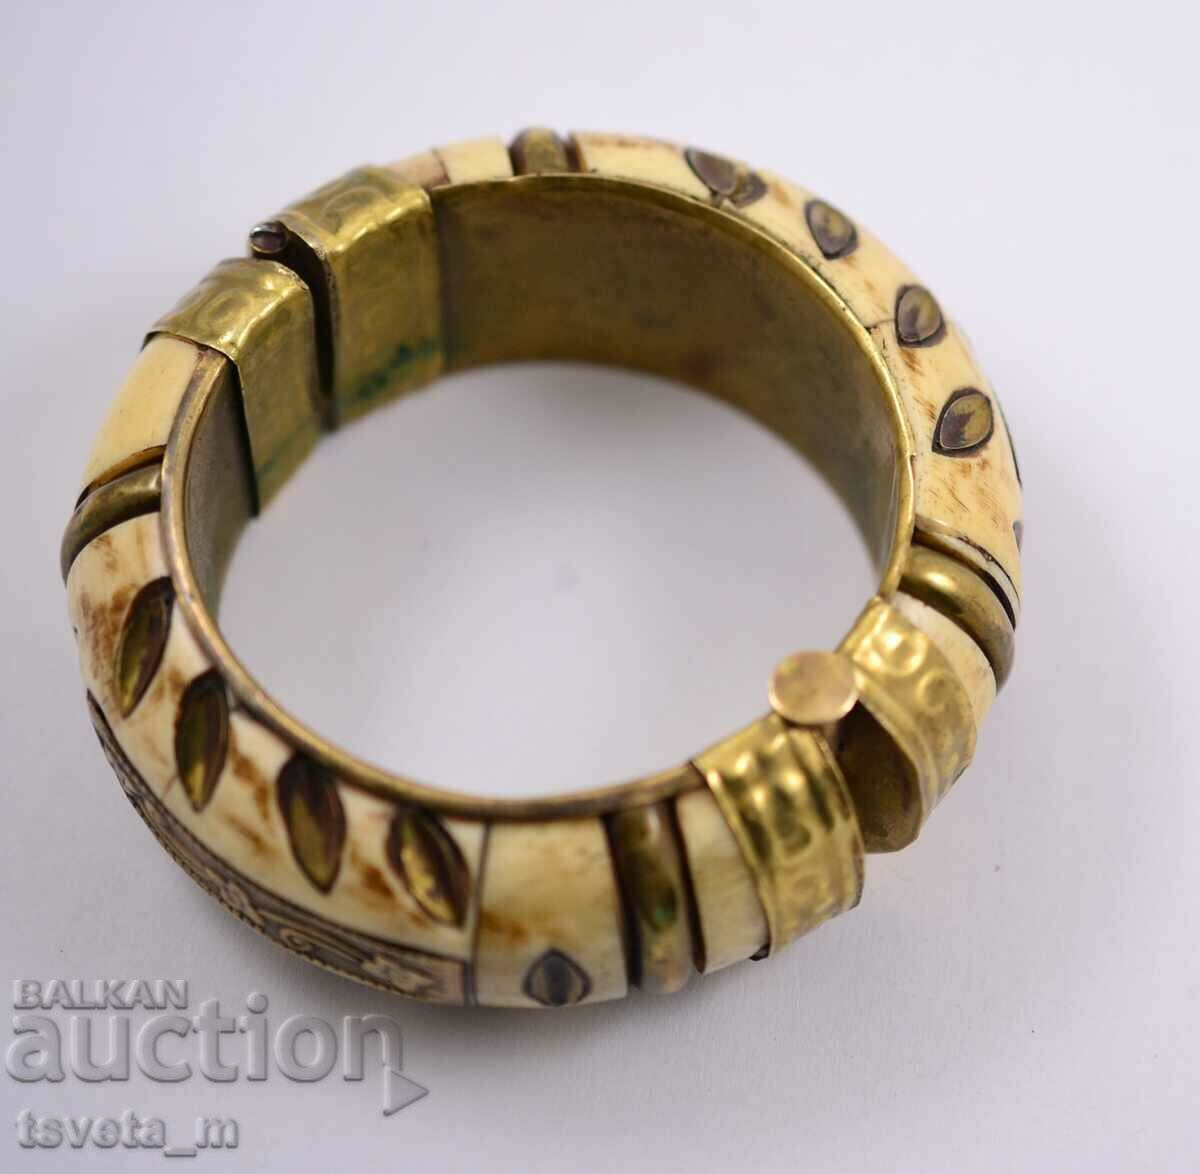 Bronze and bone bracelet